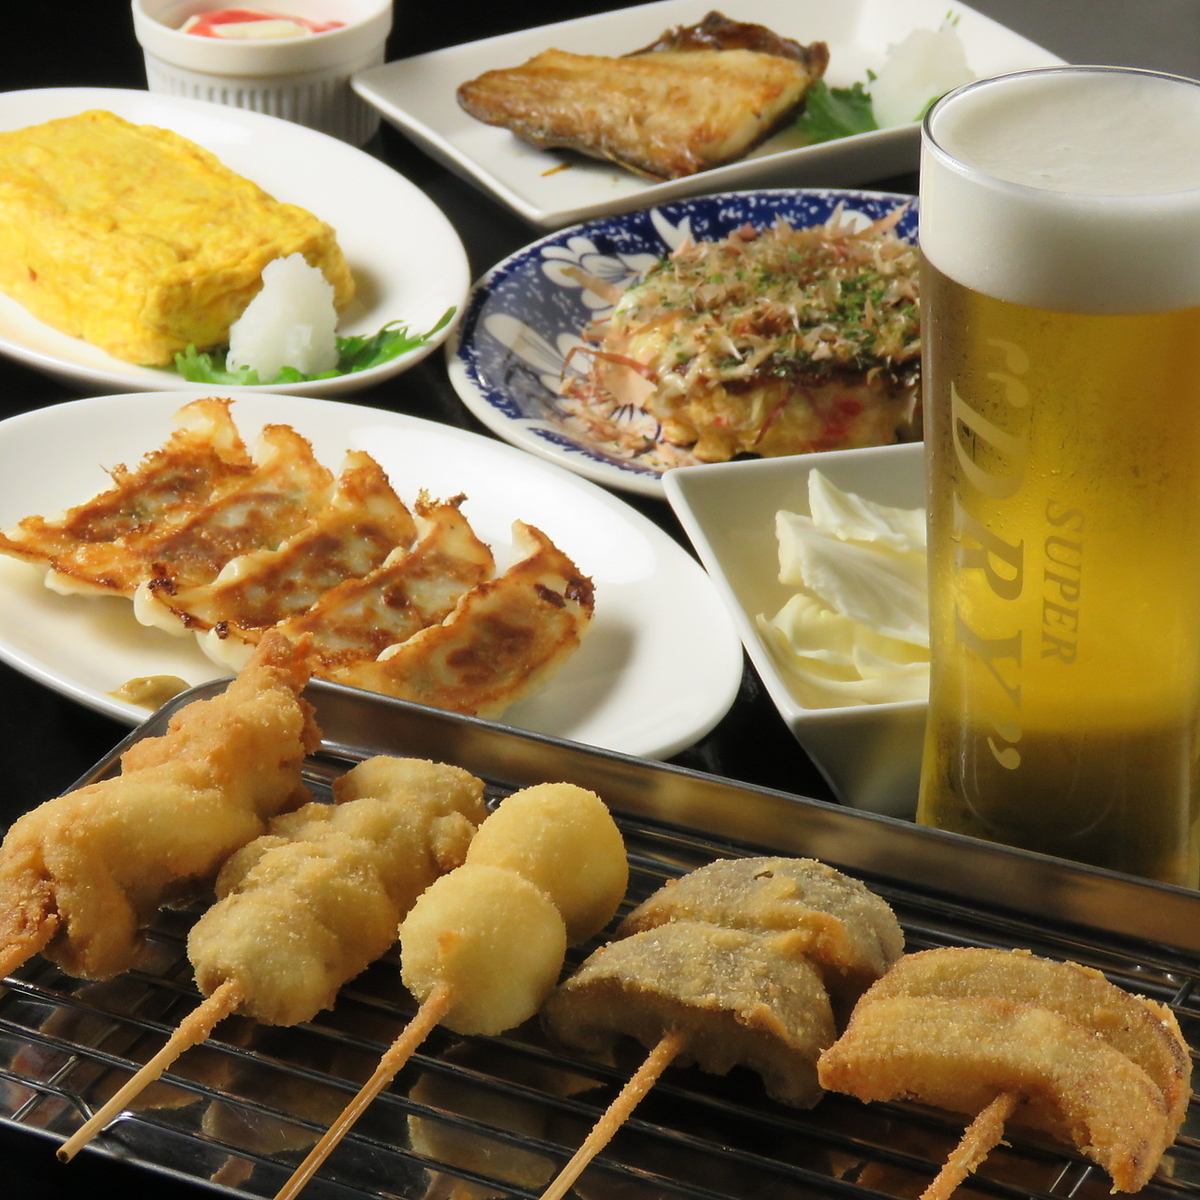 You can enjoy kushikatsu prepared in Kansai using fresh seafood☆